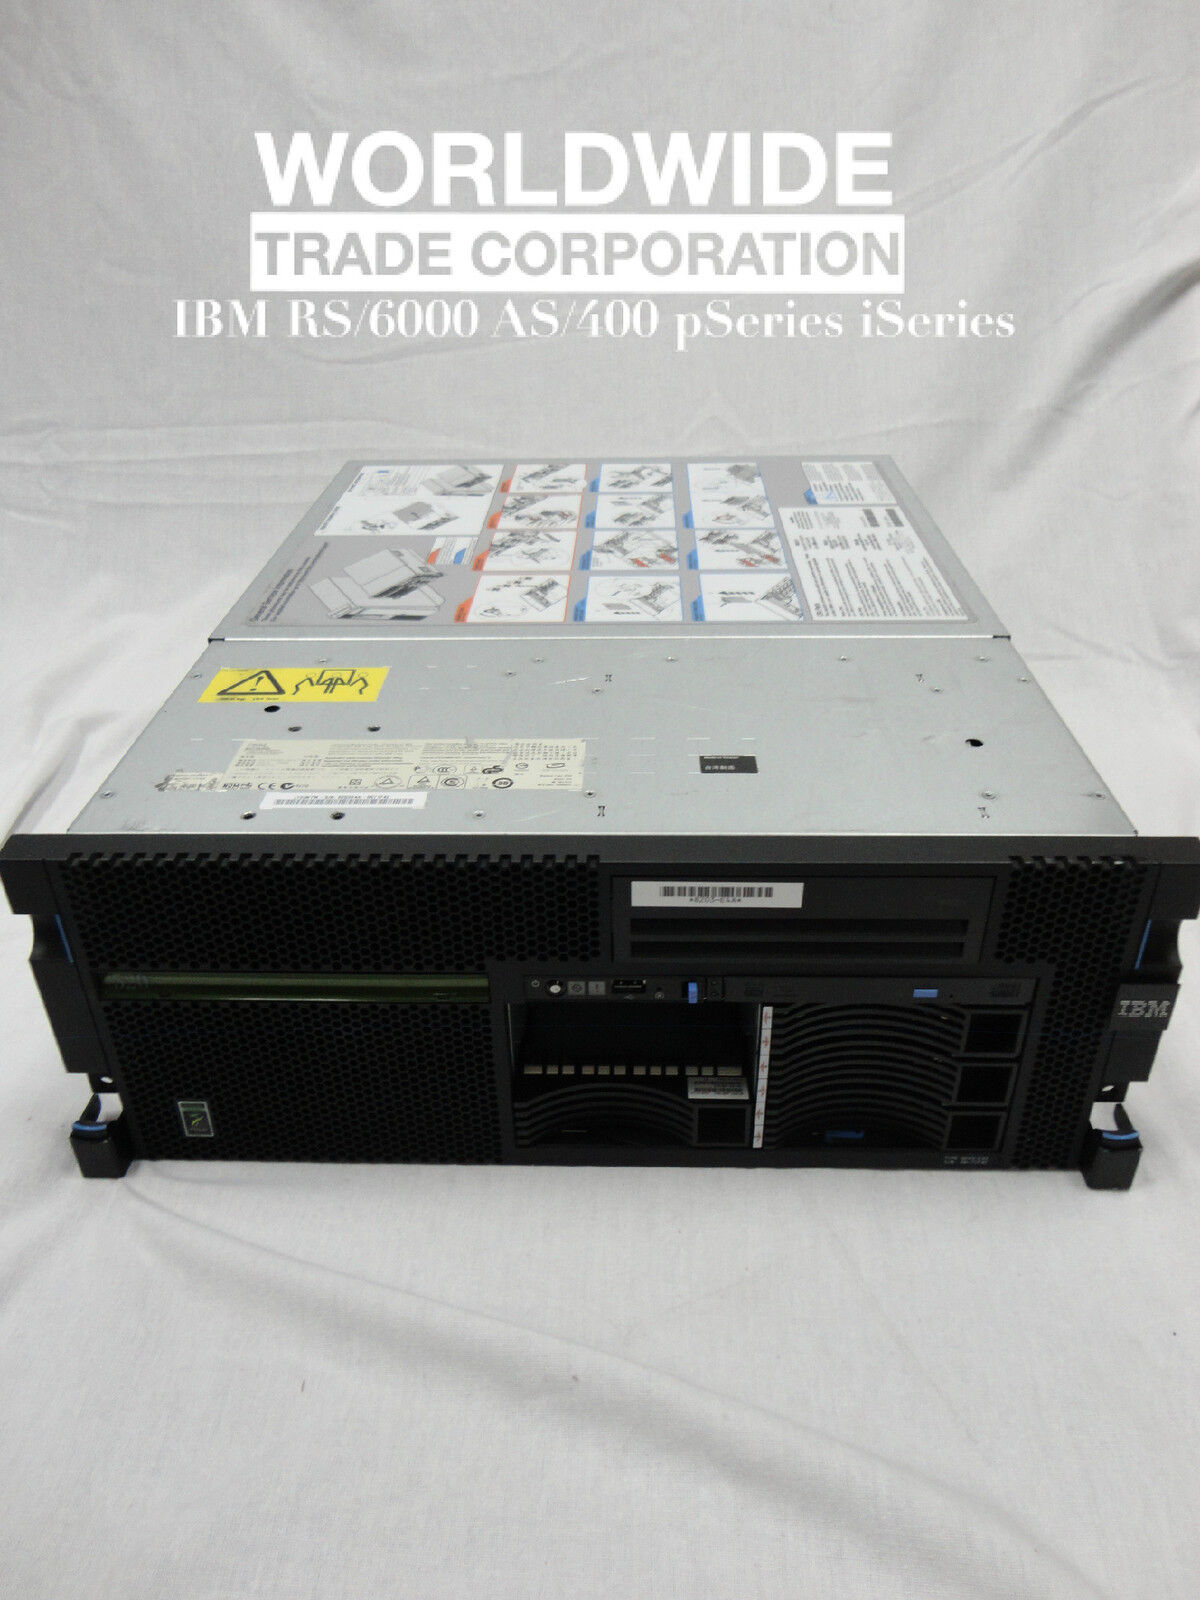 IBM 8203 E4A p 520 Server 4.2GHz 2-Core POWER6,16GB mem,146GB disk AIX 7.1 load